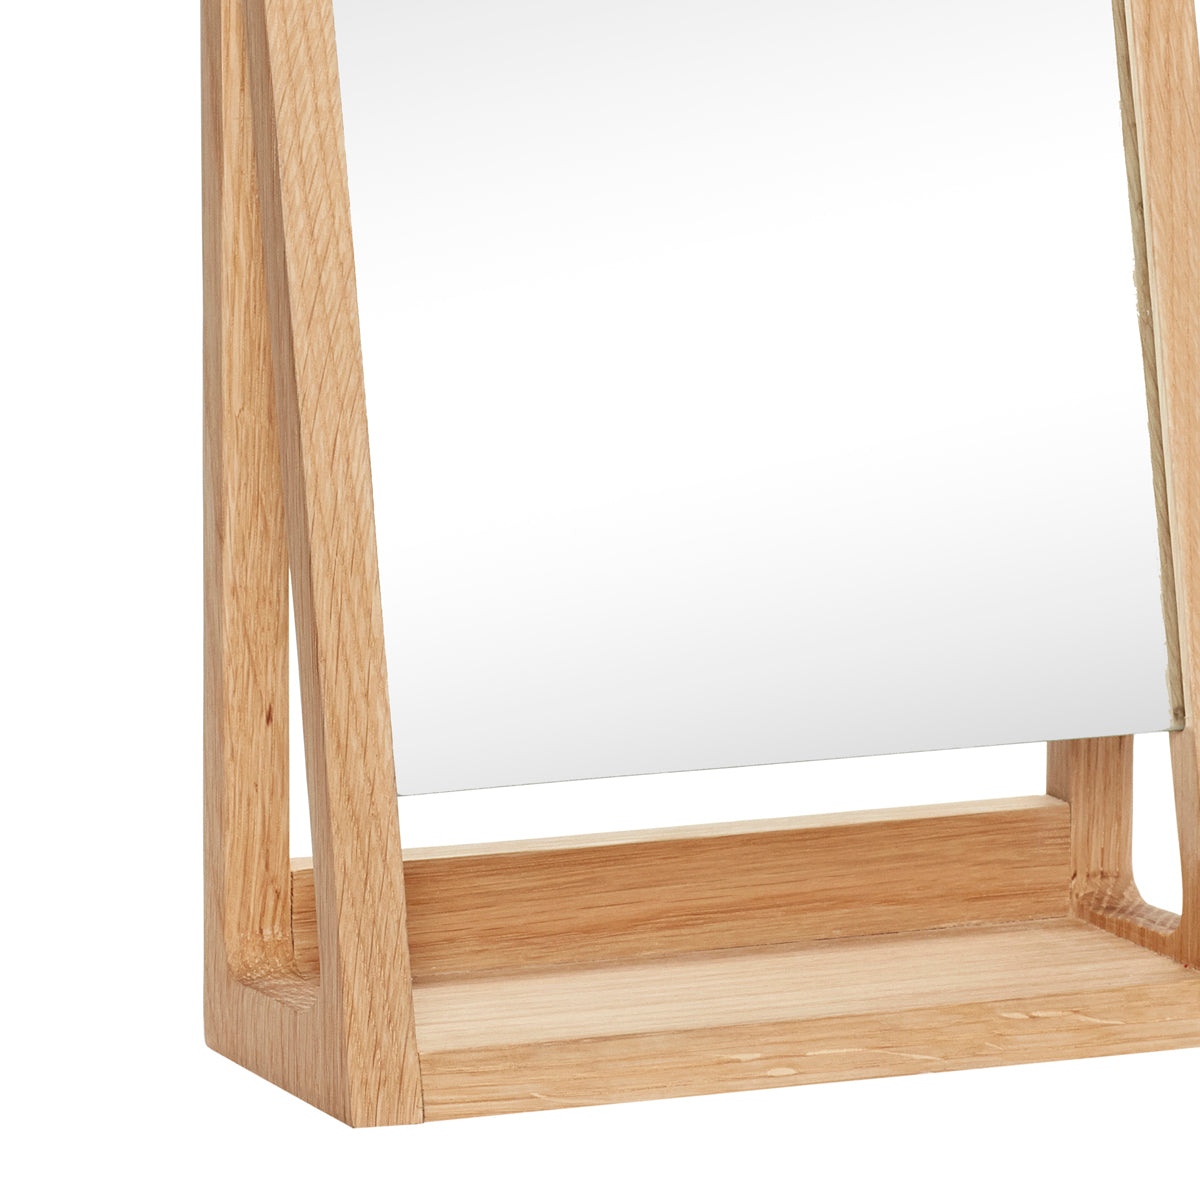 Oak Table top dressing table bathroom mirror from Hübsch